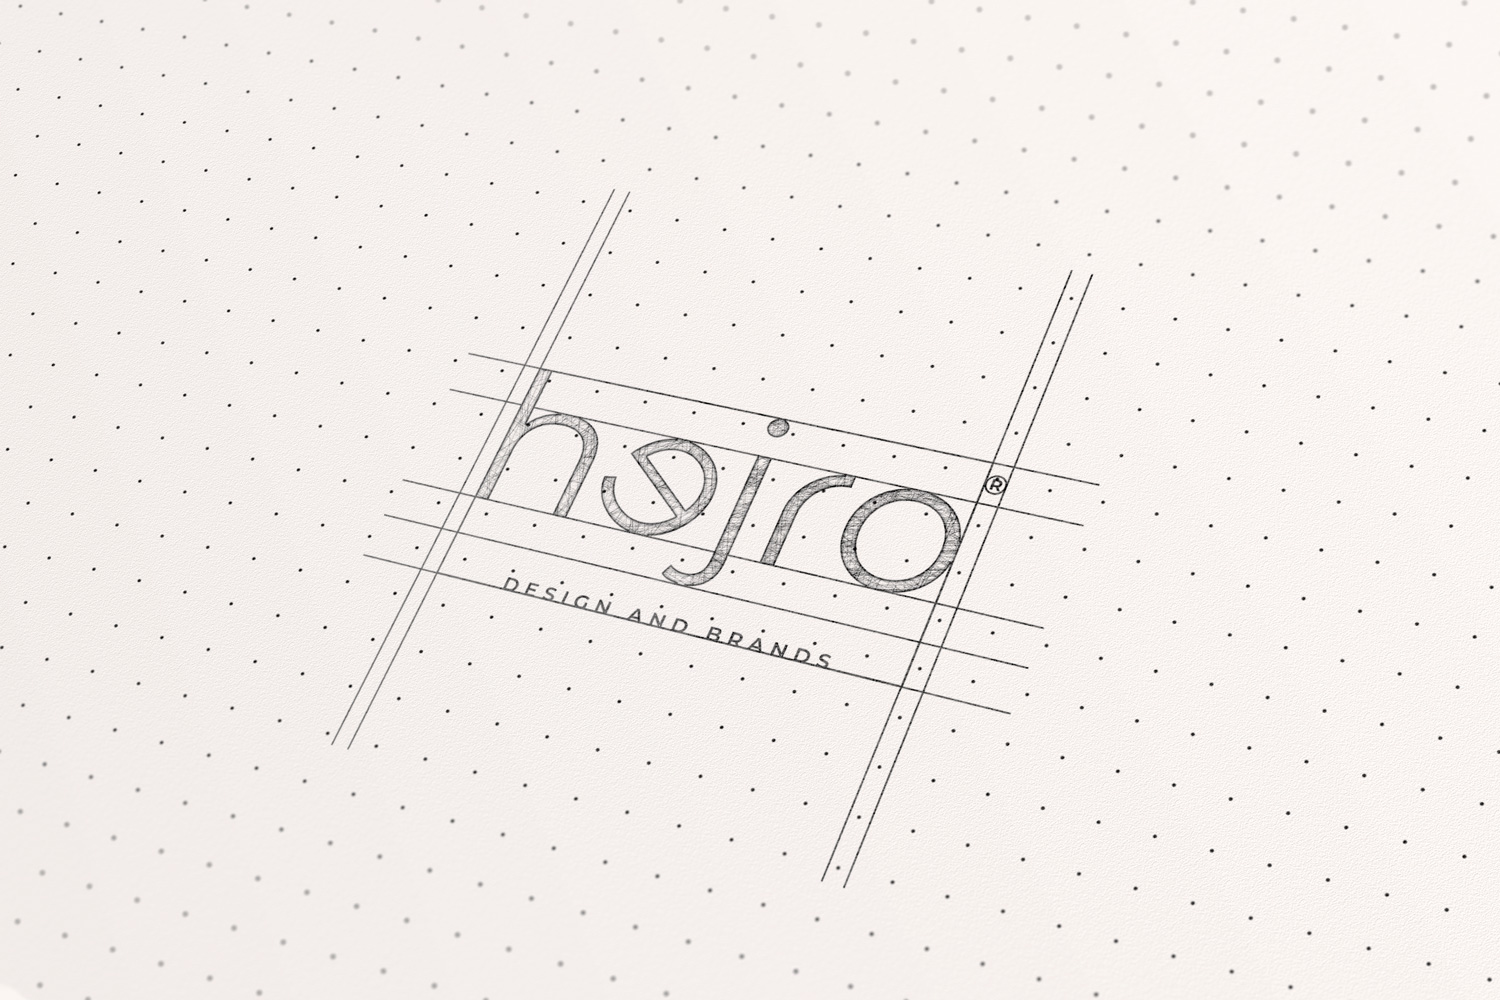 hejro DESIGN AND BRANDS – Logoentwicklung Skizze